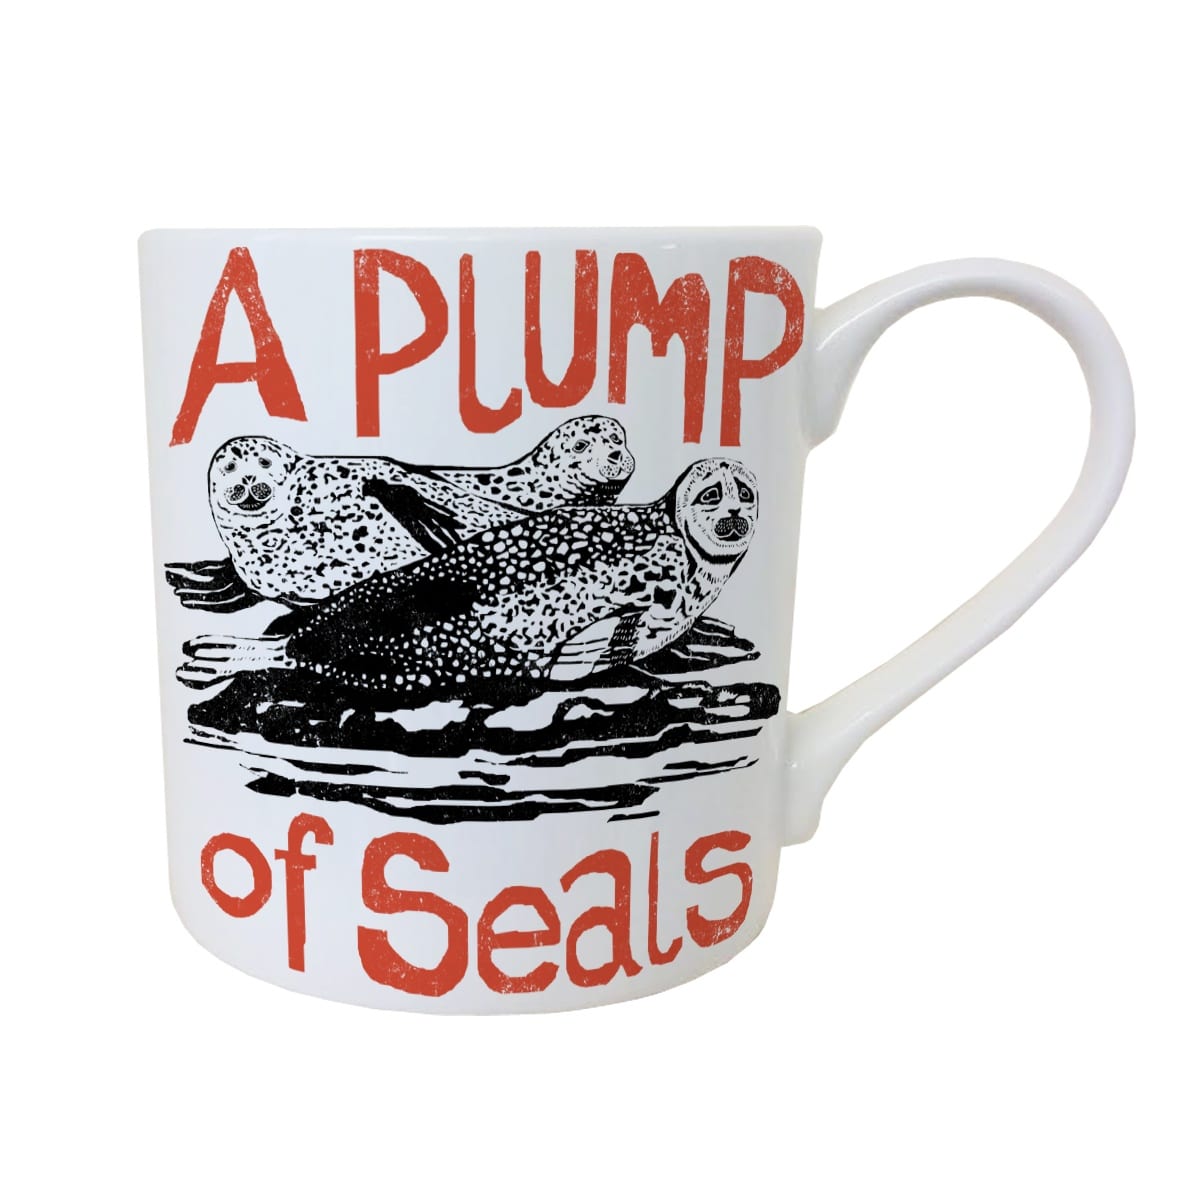 Plump of Seals mug